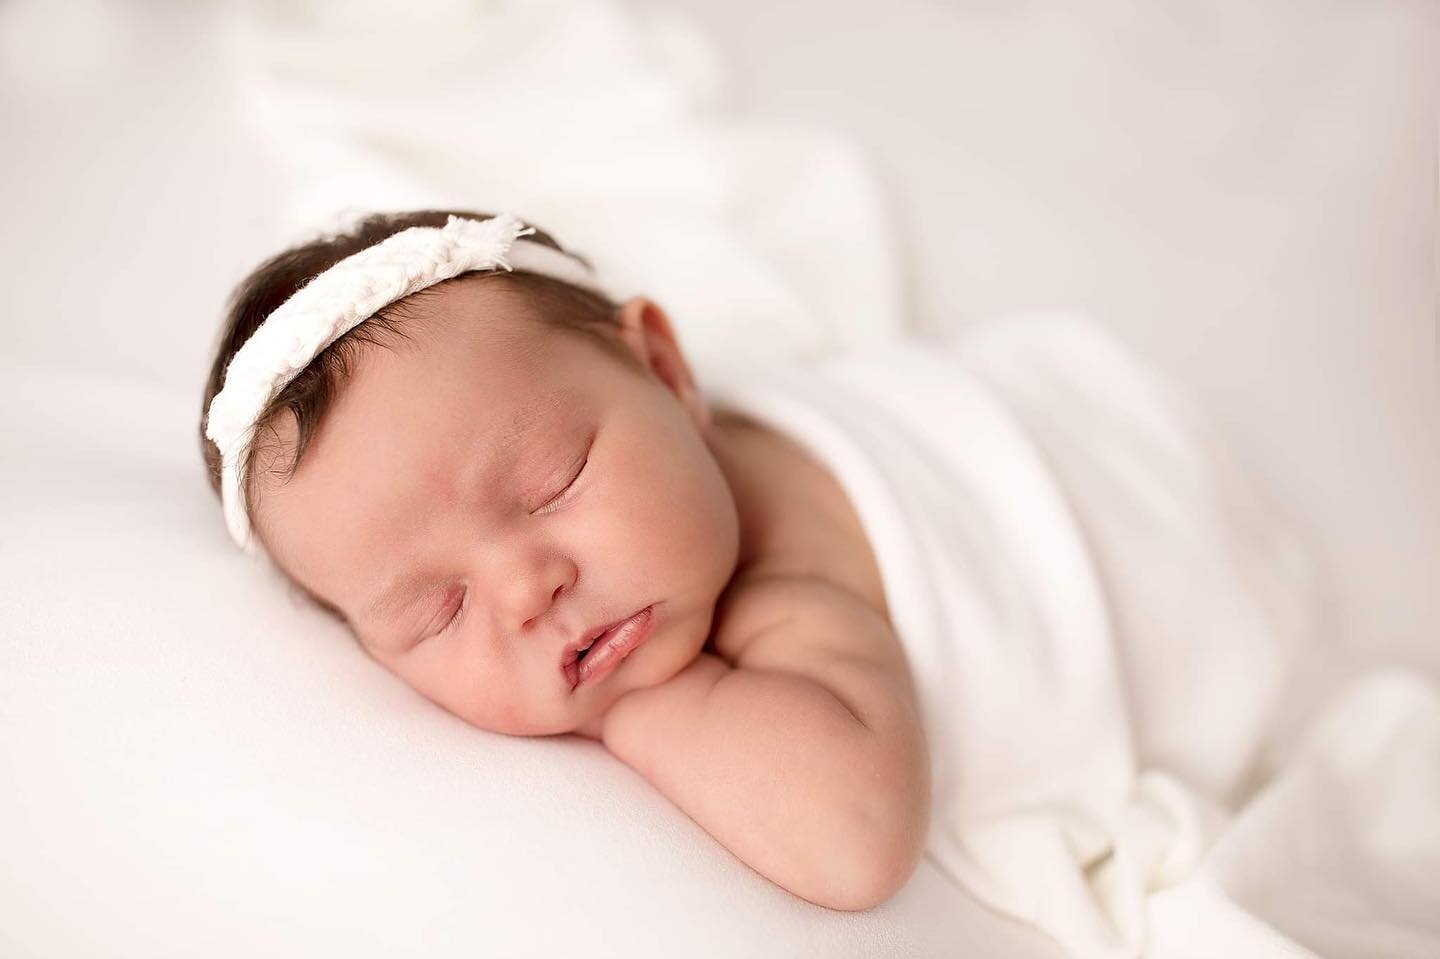 Beautiful Emilia sleeping peacefully during her #newbornphotoshoot 🥰

#newbornphotography #newbornsession #kalamazoonewbornphotographer #battlecreeknewbornphotographer #babygirl #babiesofinstagram #babyphotography